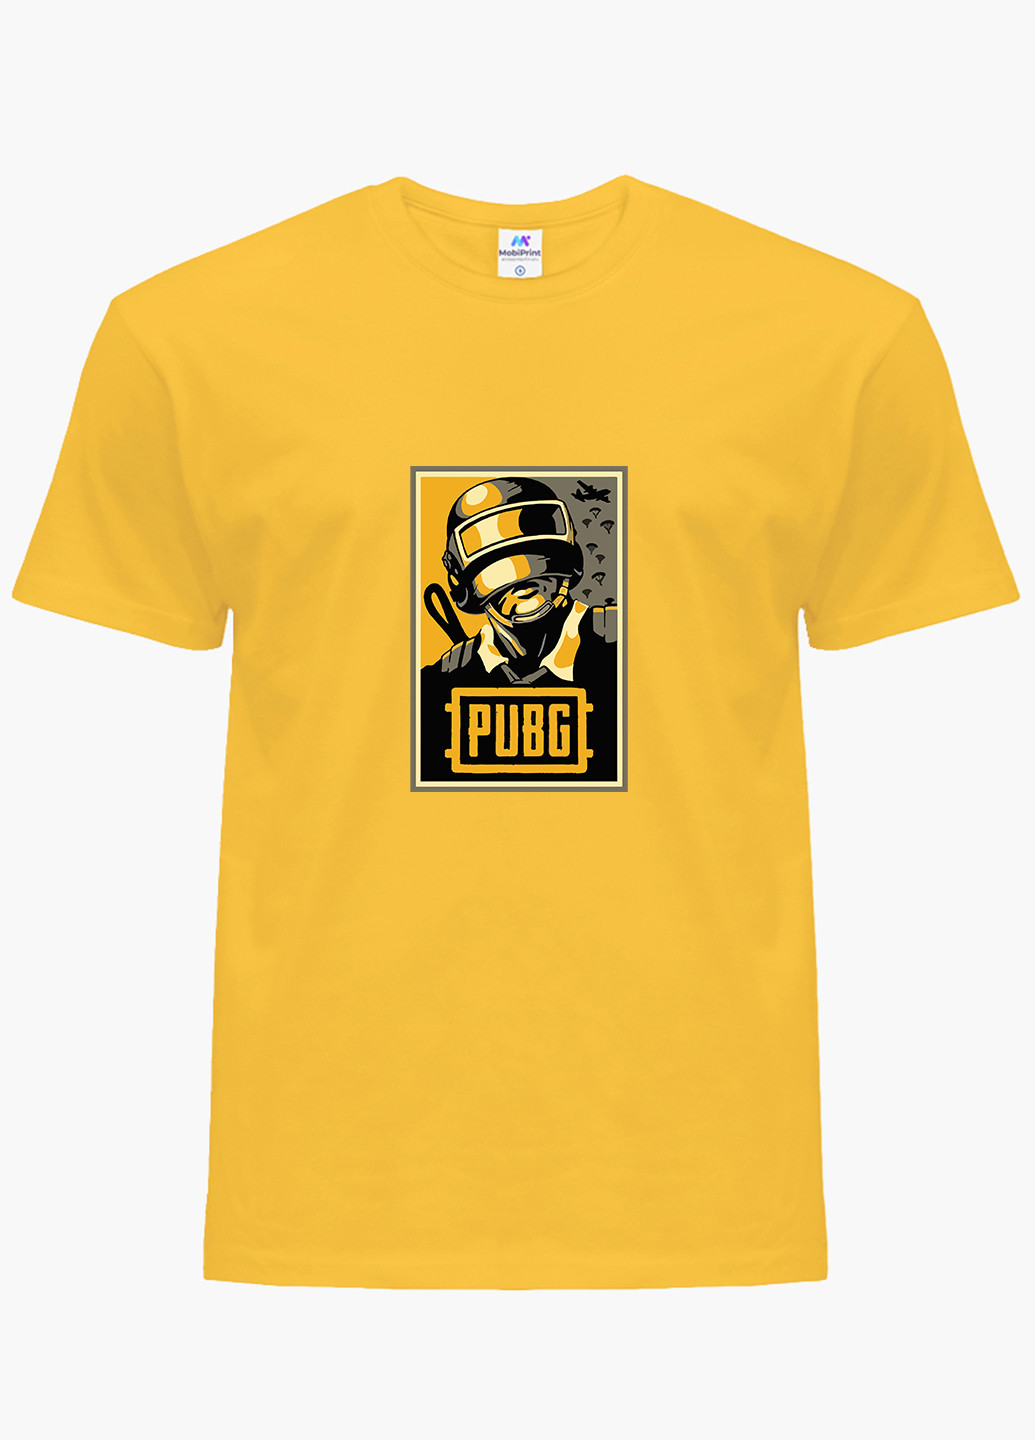 Жовта демісезонна футболка дитяча пубг пабг (pubg) (9224-1179) MobiPrint